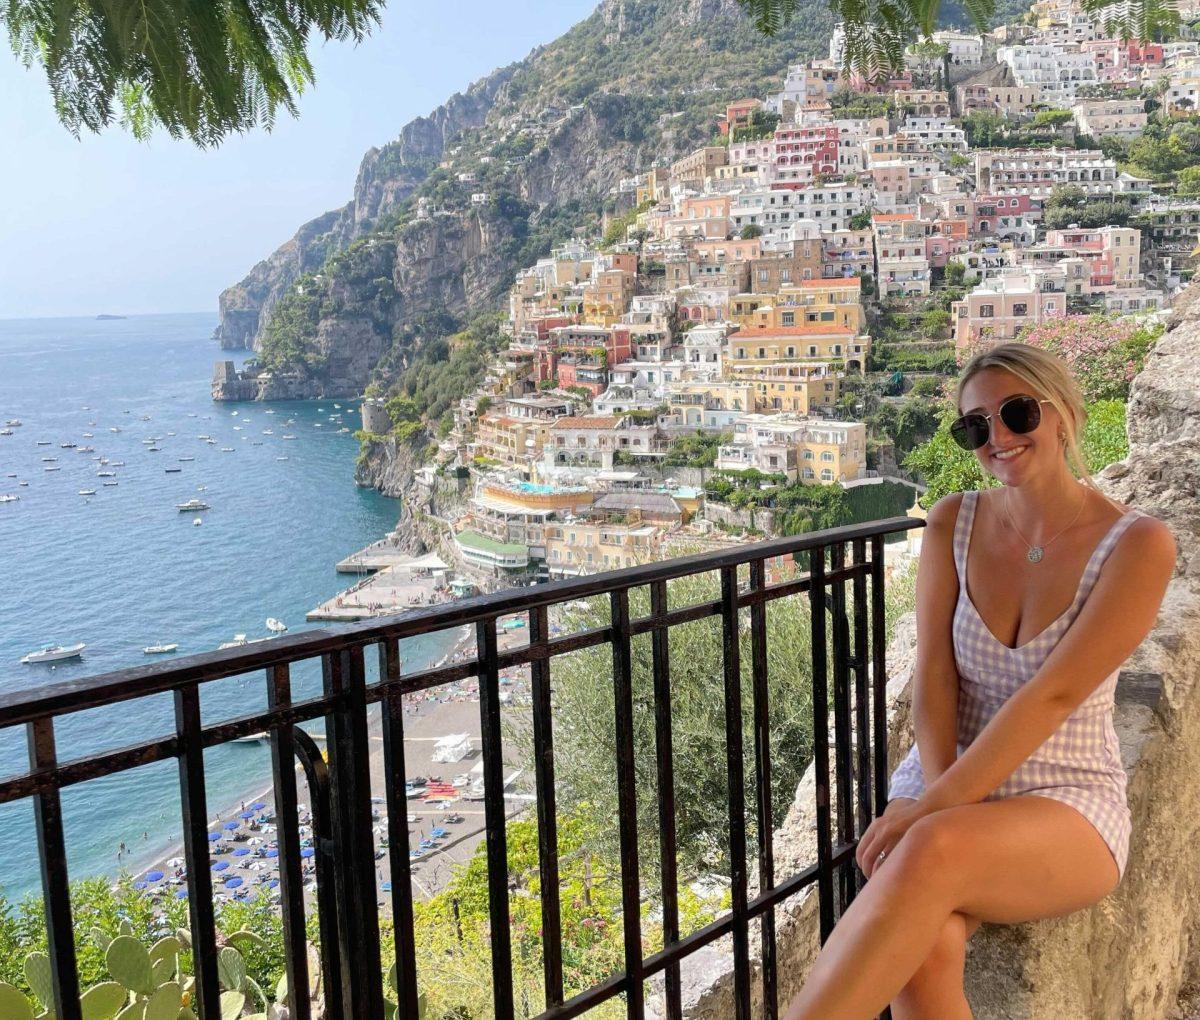 Samantha Franzman ’23 on her study tour in Positano, Italy on Sept. 25th
PHOTO COURTESY OF SAMANTHA FRANZMAN ’23